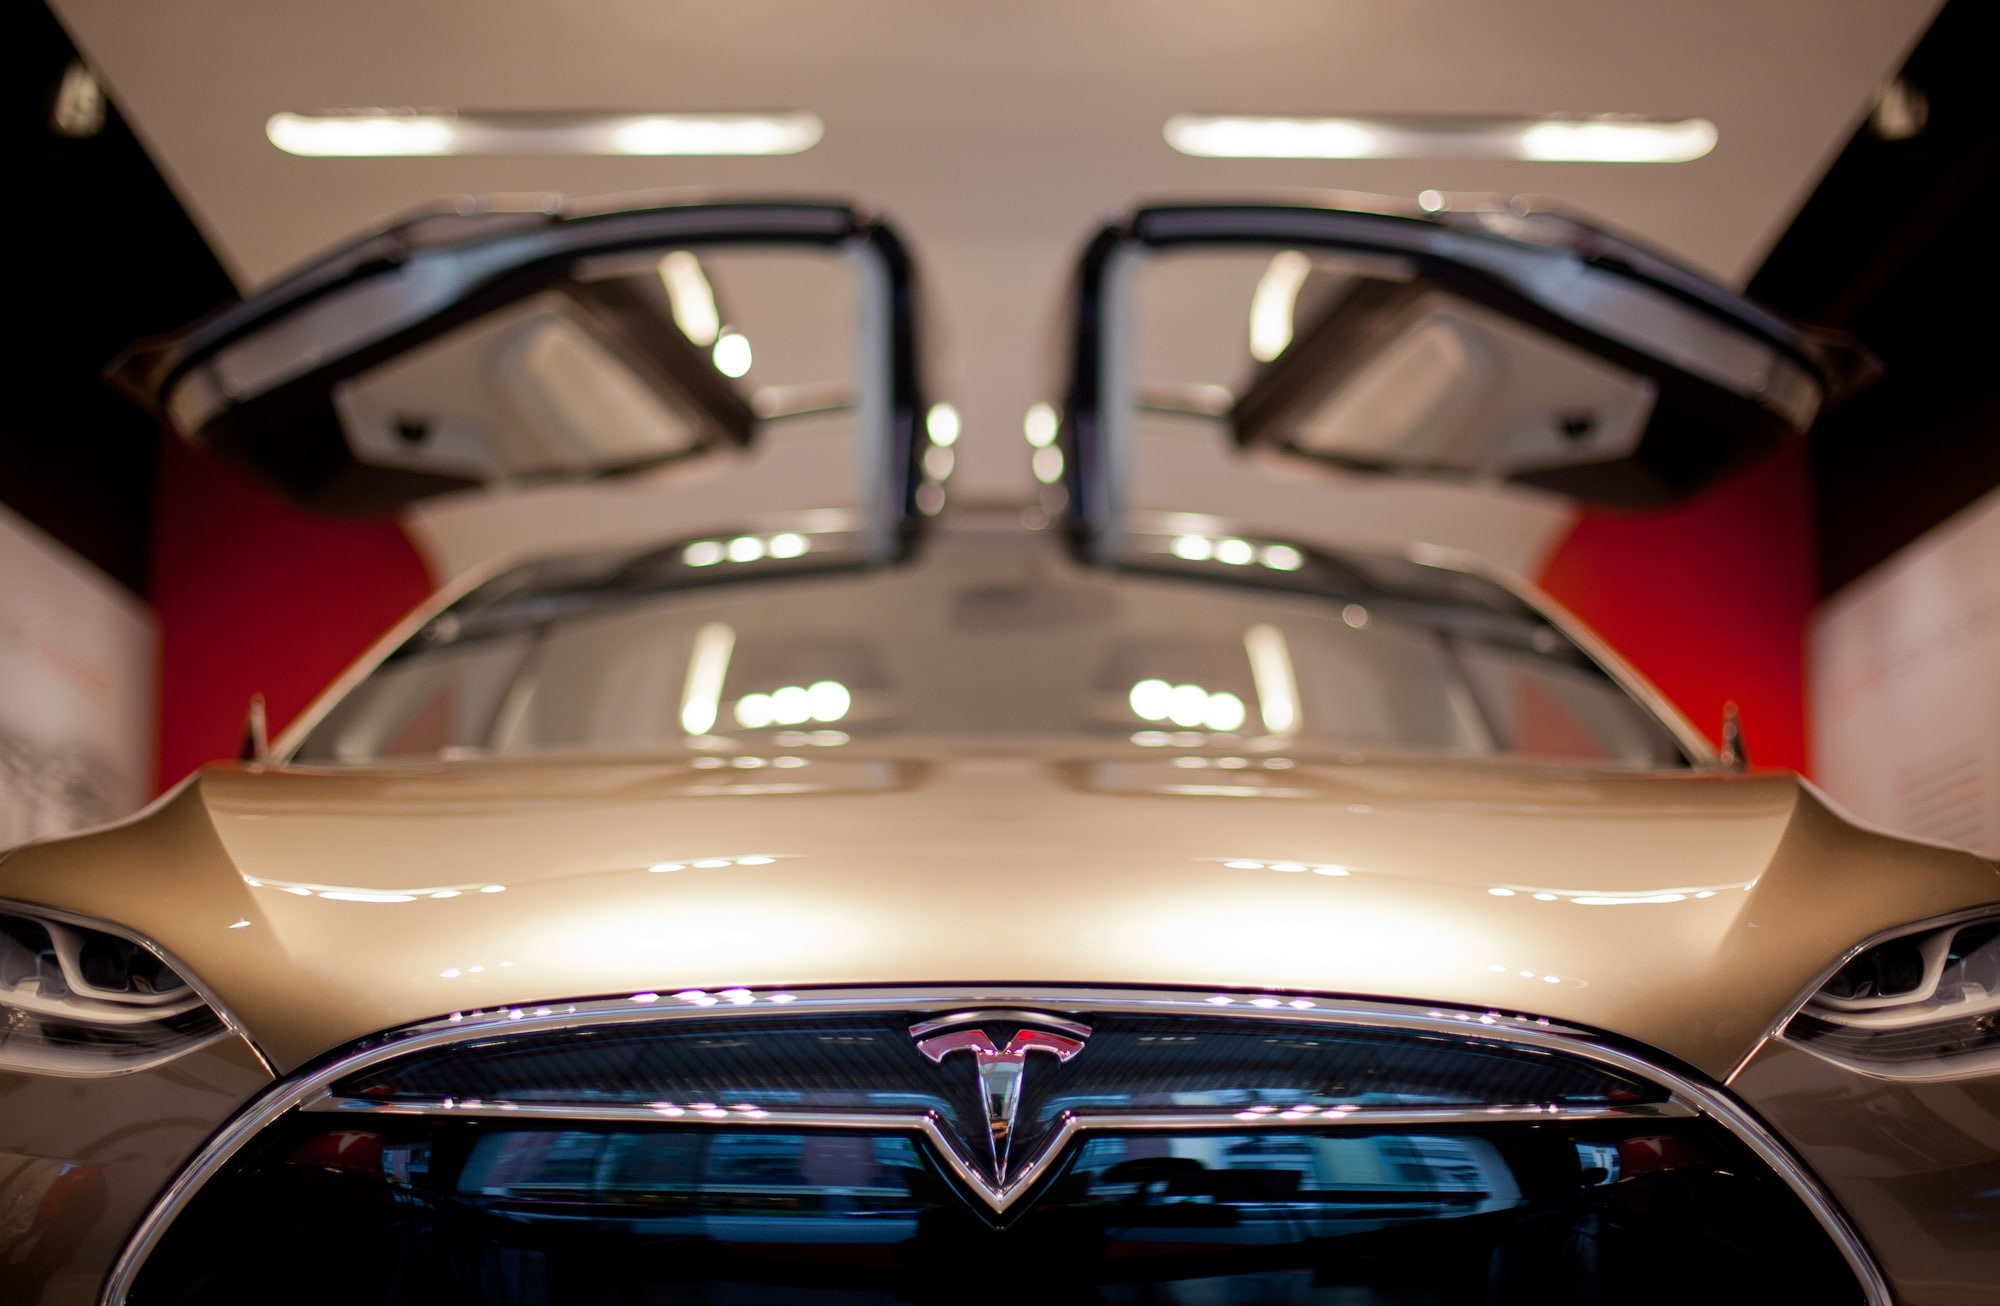 Tesla Model X Santana Row, silver Tesla Model S, Cars, Other Cars